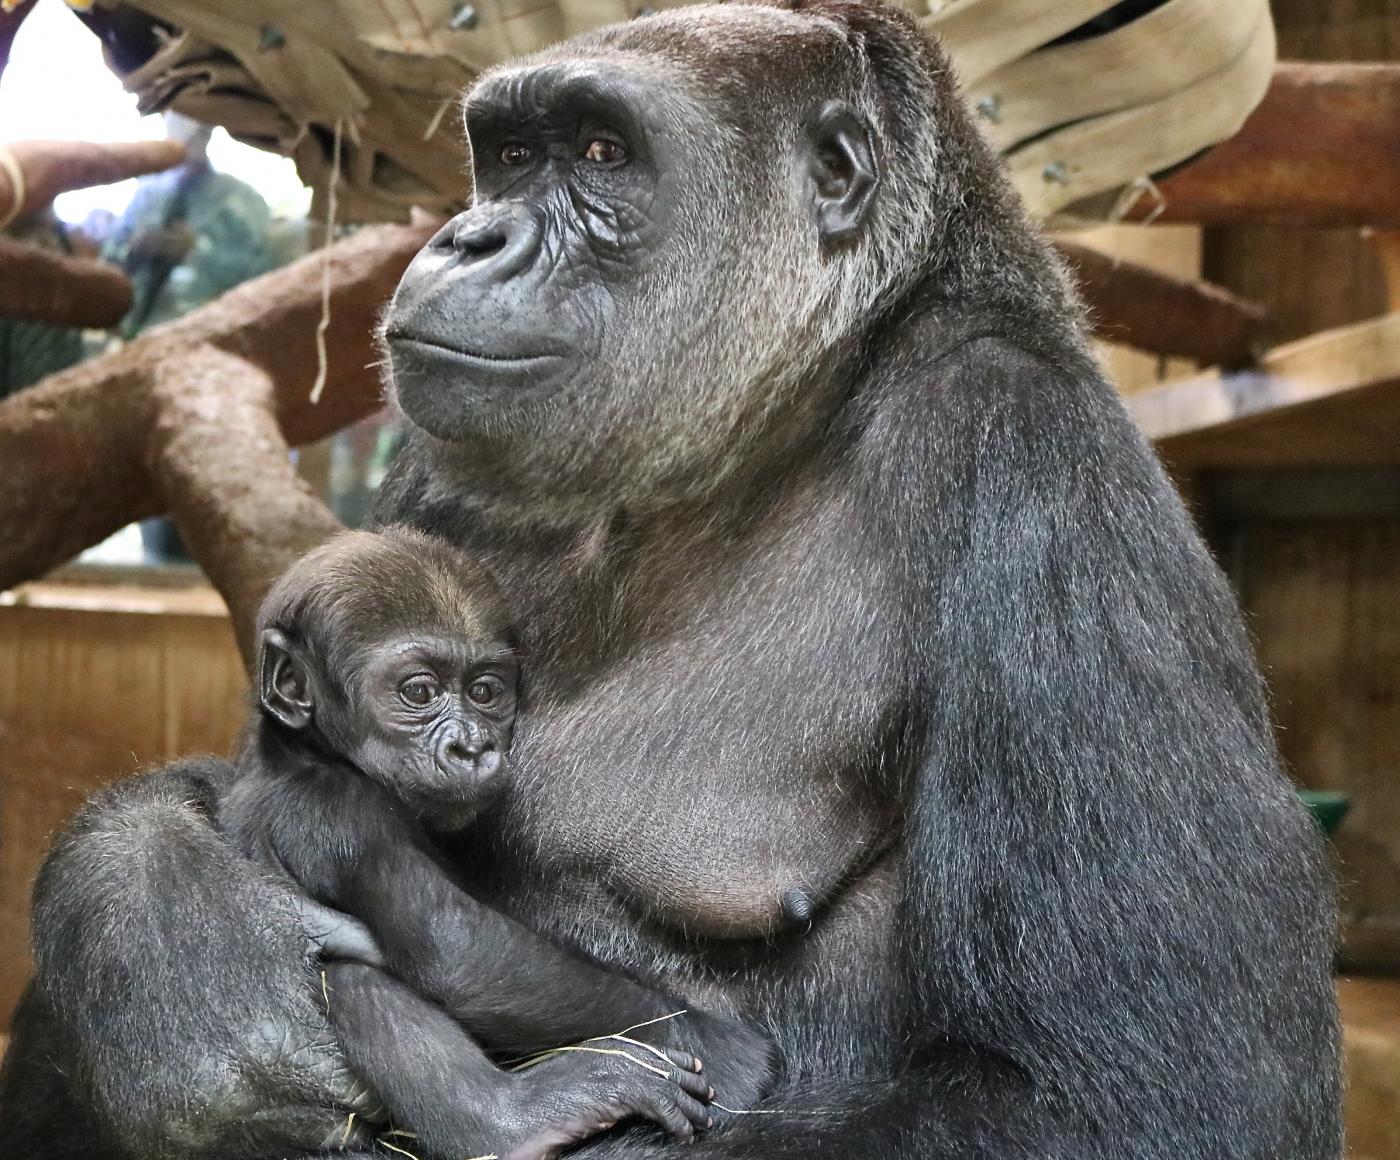 Calaya holds Moke, the Zoo's 10-week-old western lowland gorilla. 